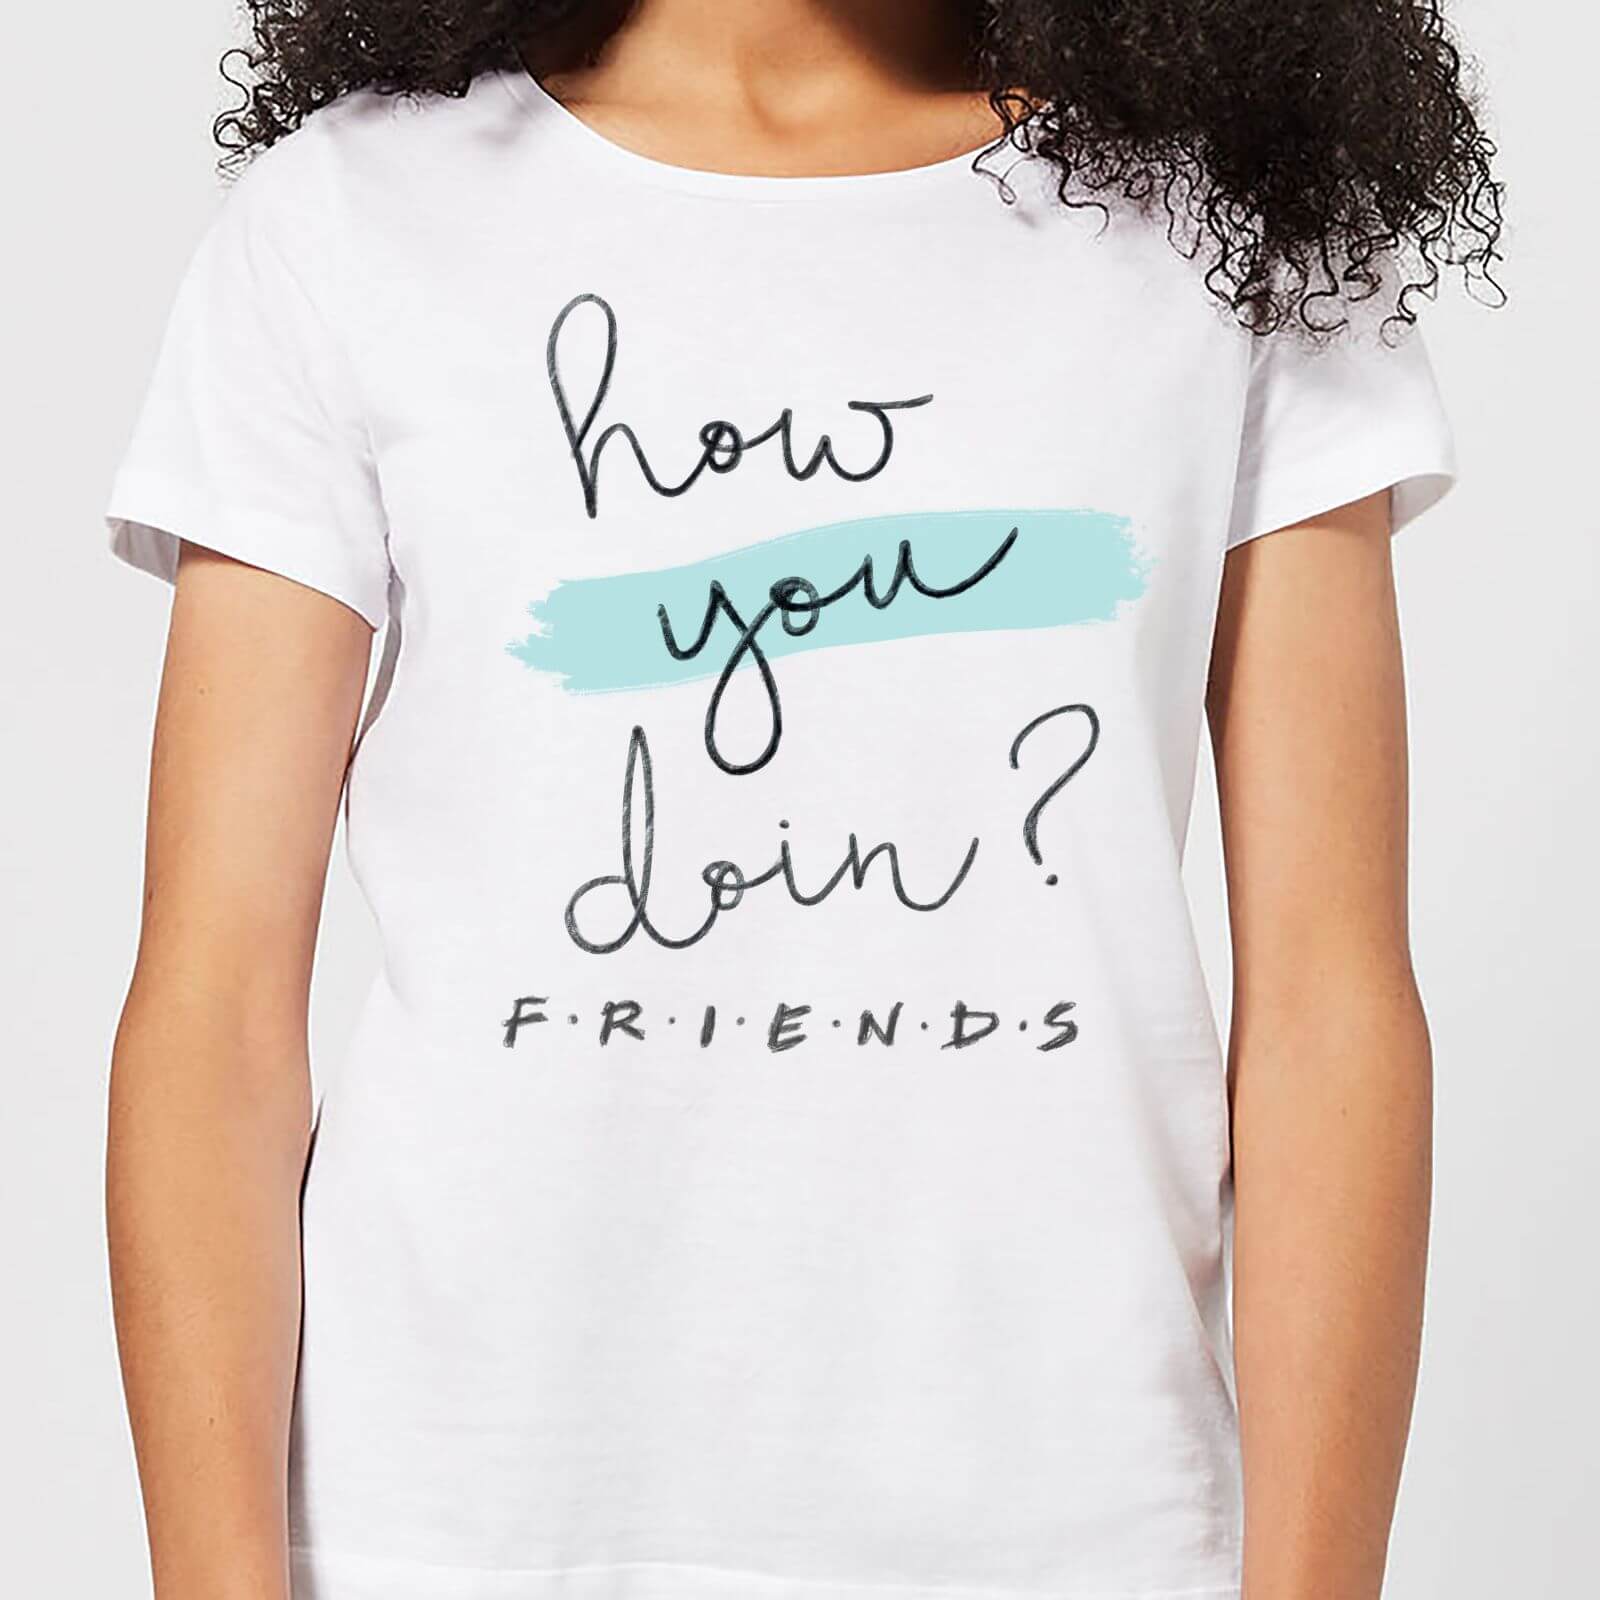 Friends How You Doin? Women's T-Shirt - White - 4XL